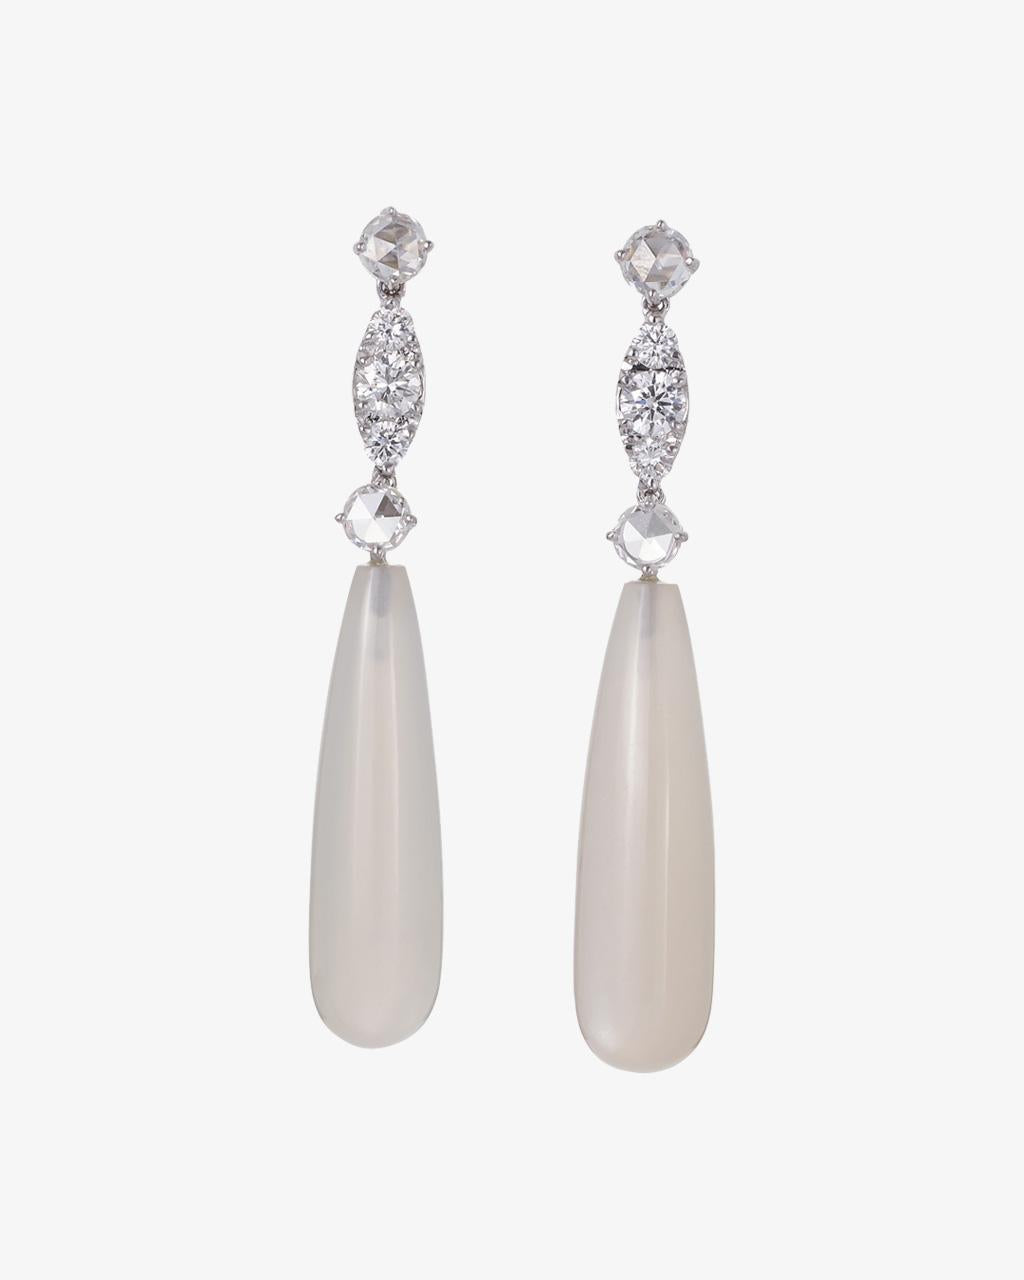 Moonstone and Diamond Earrings